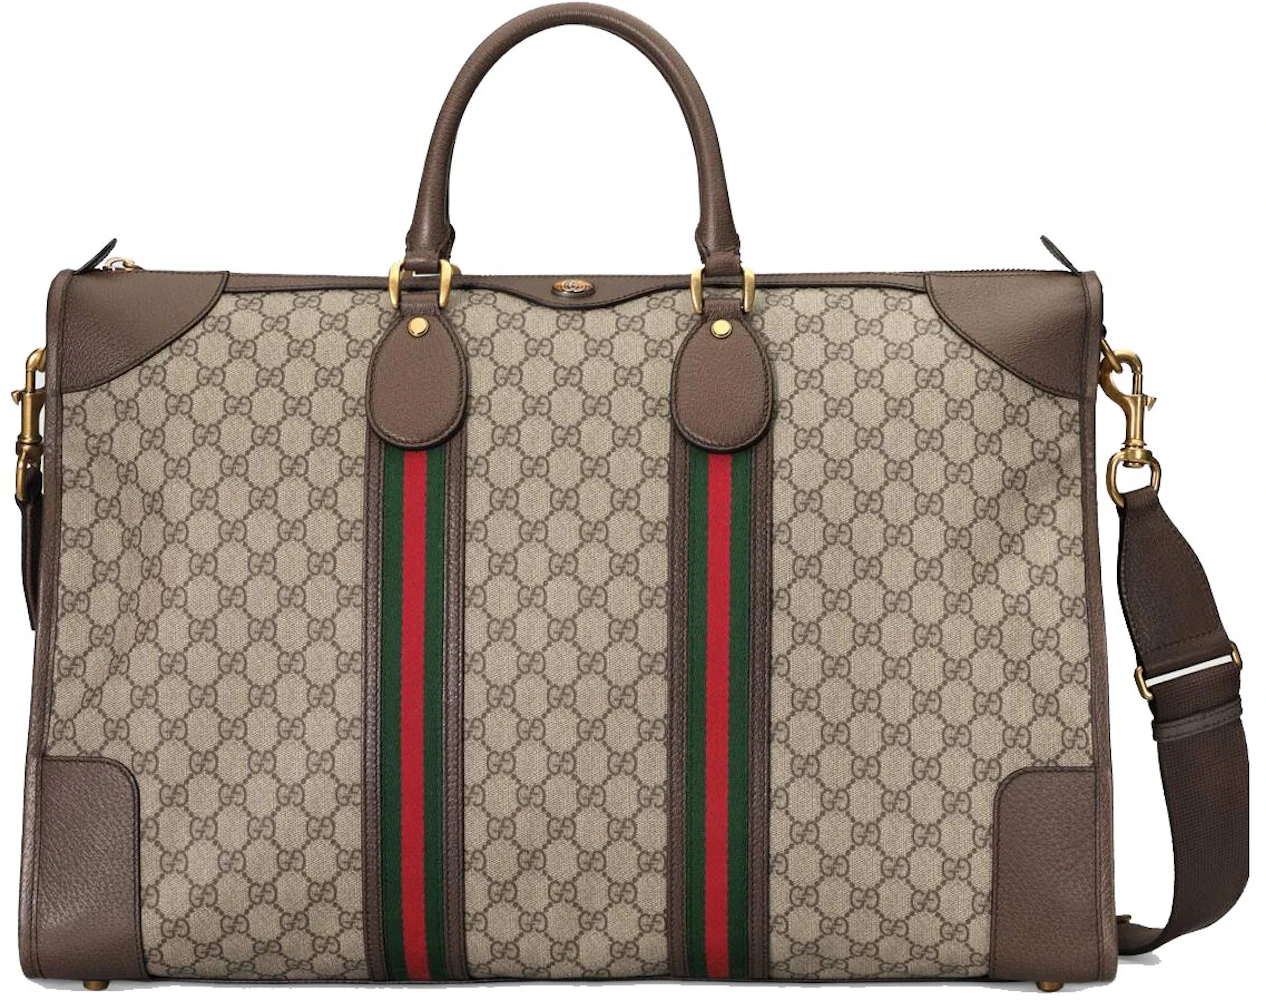  Gucci Duffle Travel Militare GG Beige Ebony Tmoro Bag